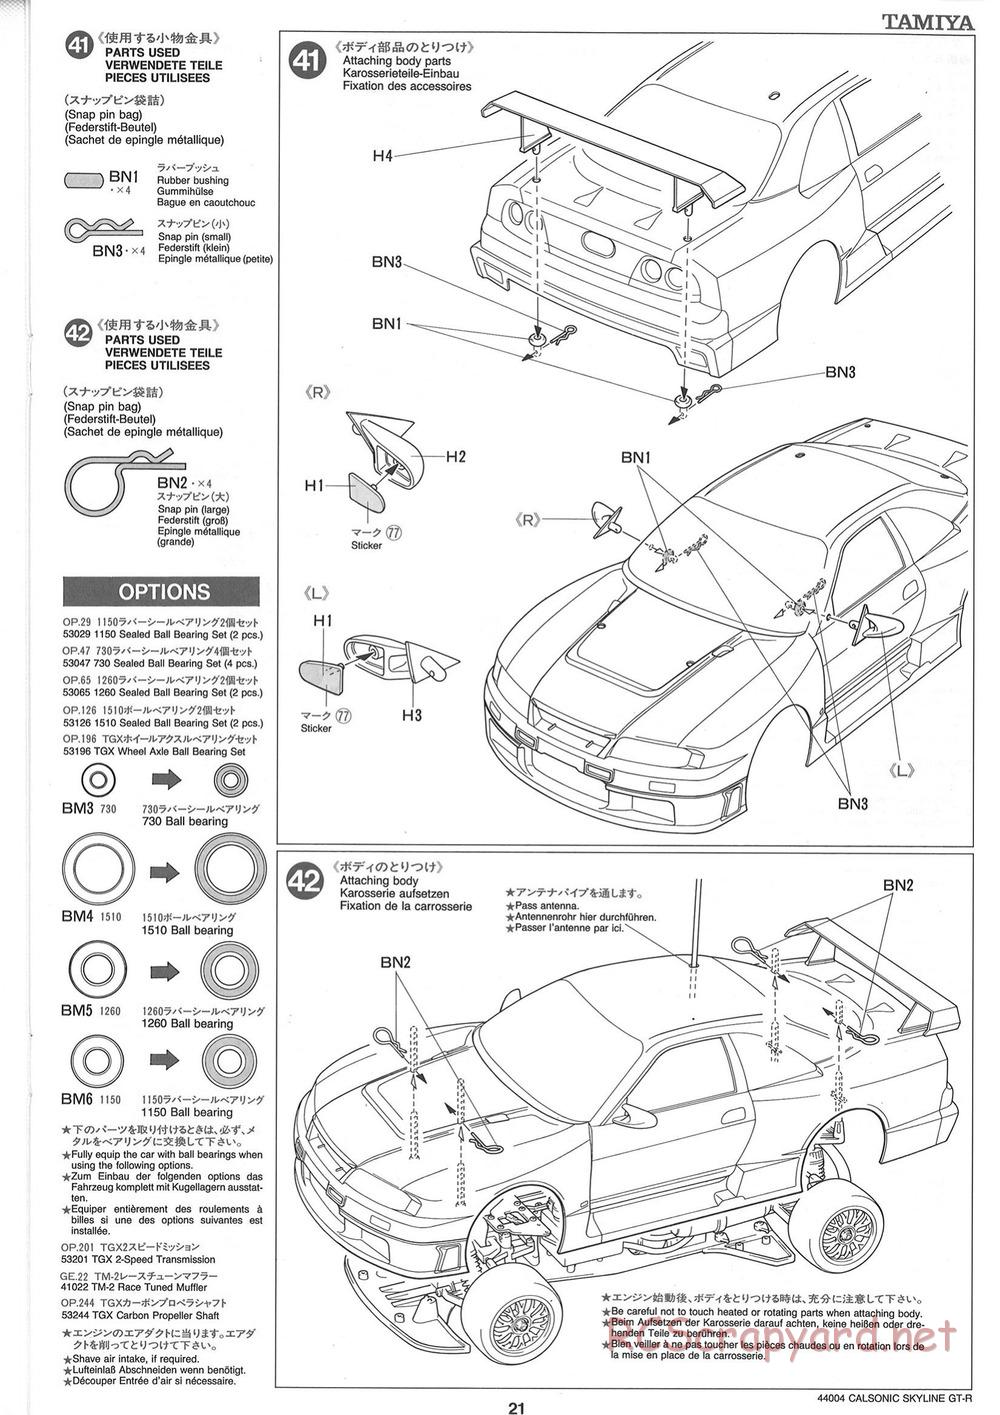 Tamiya - Calsonic GT-R - TGX Mk.1 Chassis - Manual - Page 21